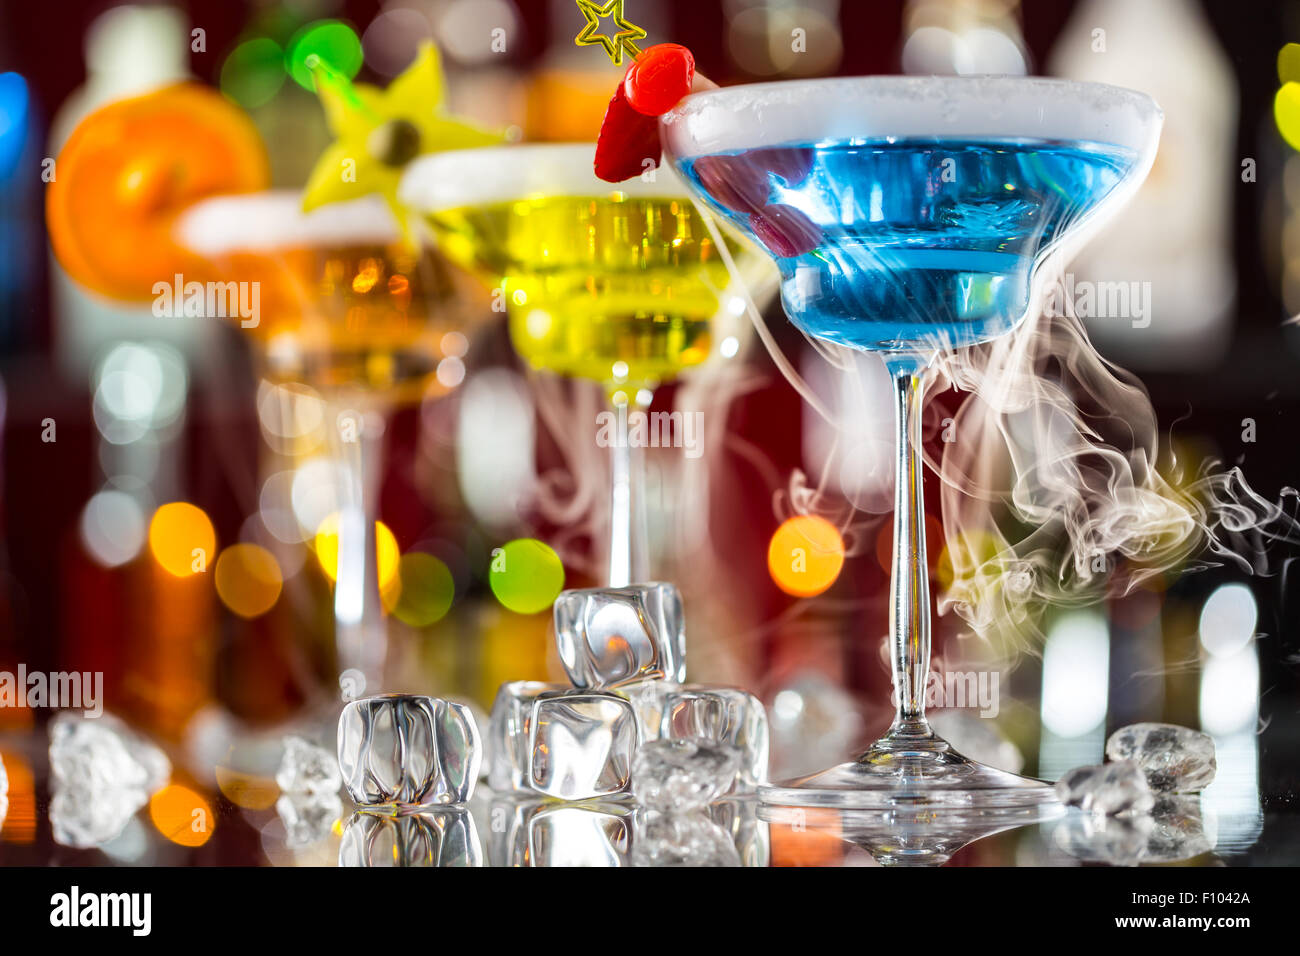 Martini drinks on bar counter Stock Photo